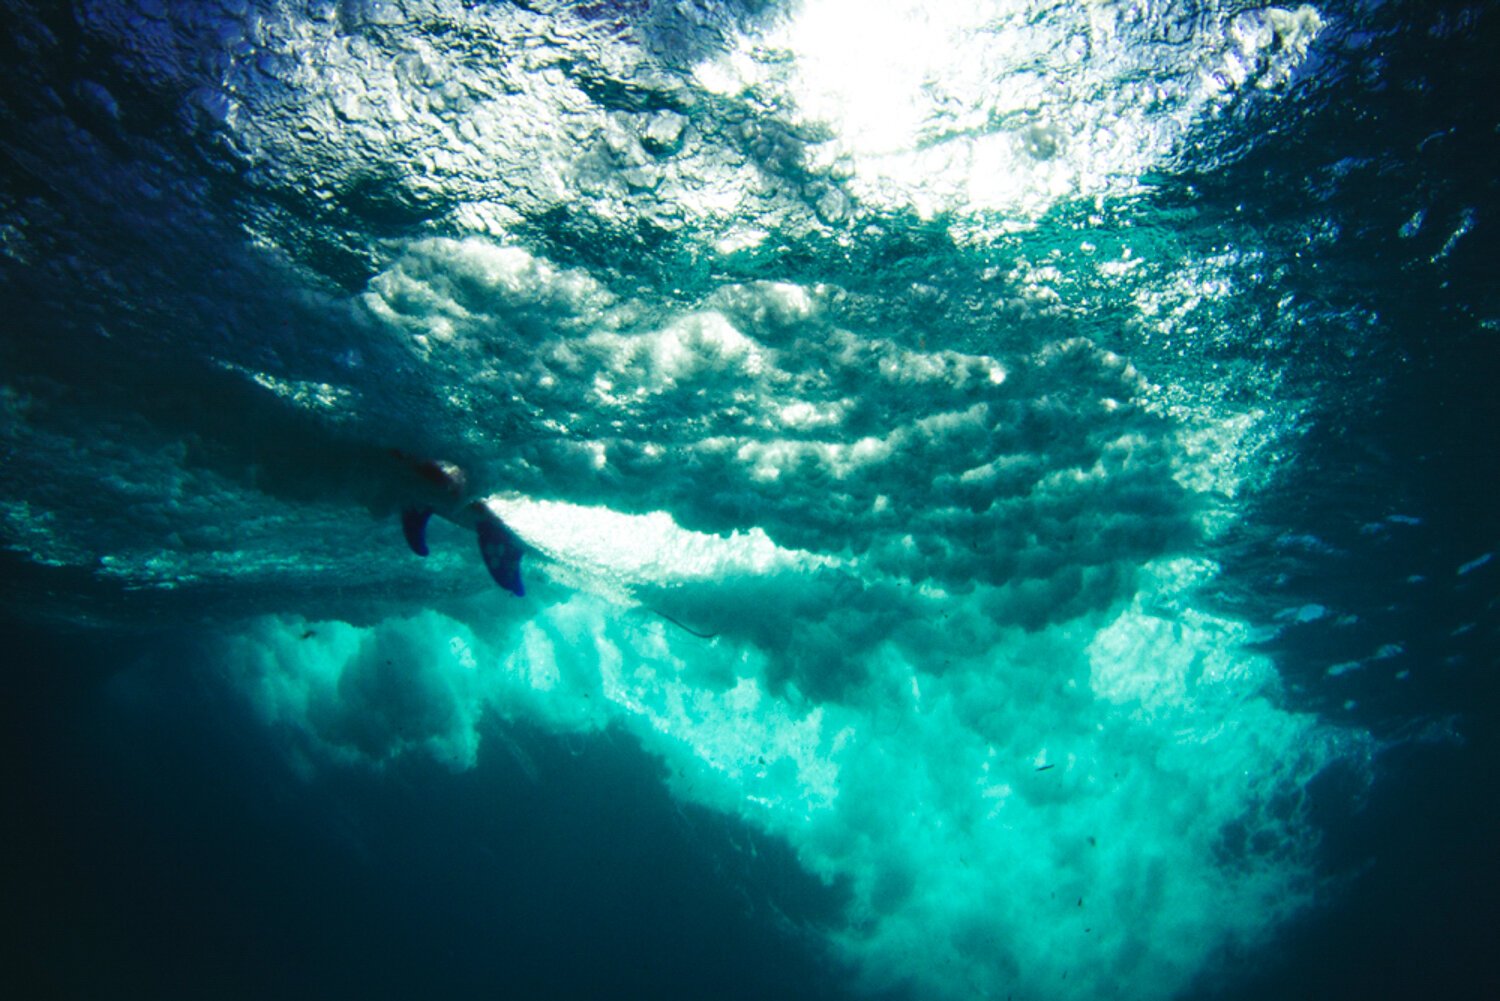 surf surfing lifestyle ocean beach nature photography photographer krista espino underwater travel corse corsica island mediterranean sea europe france french photographe-21.jpg